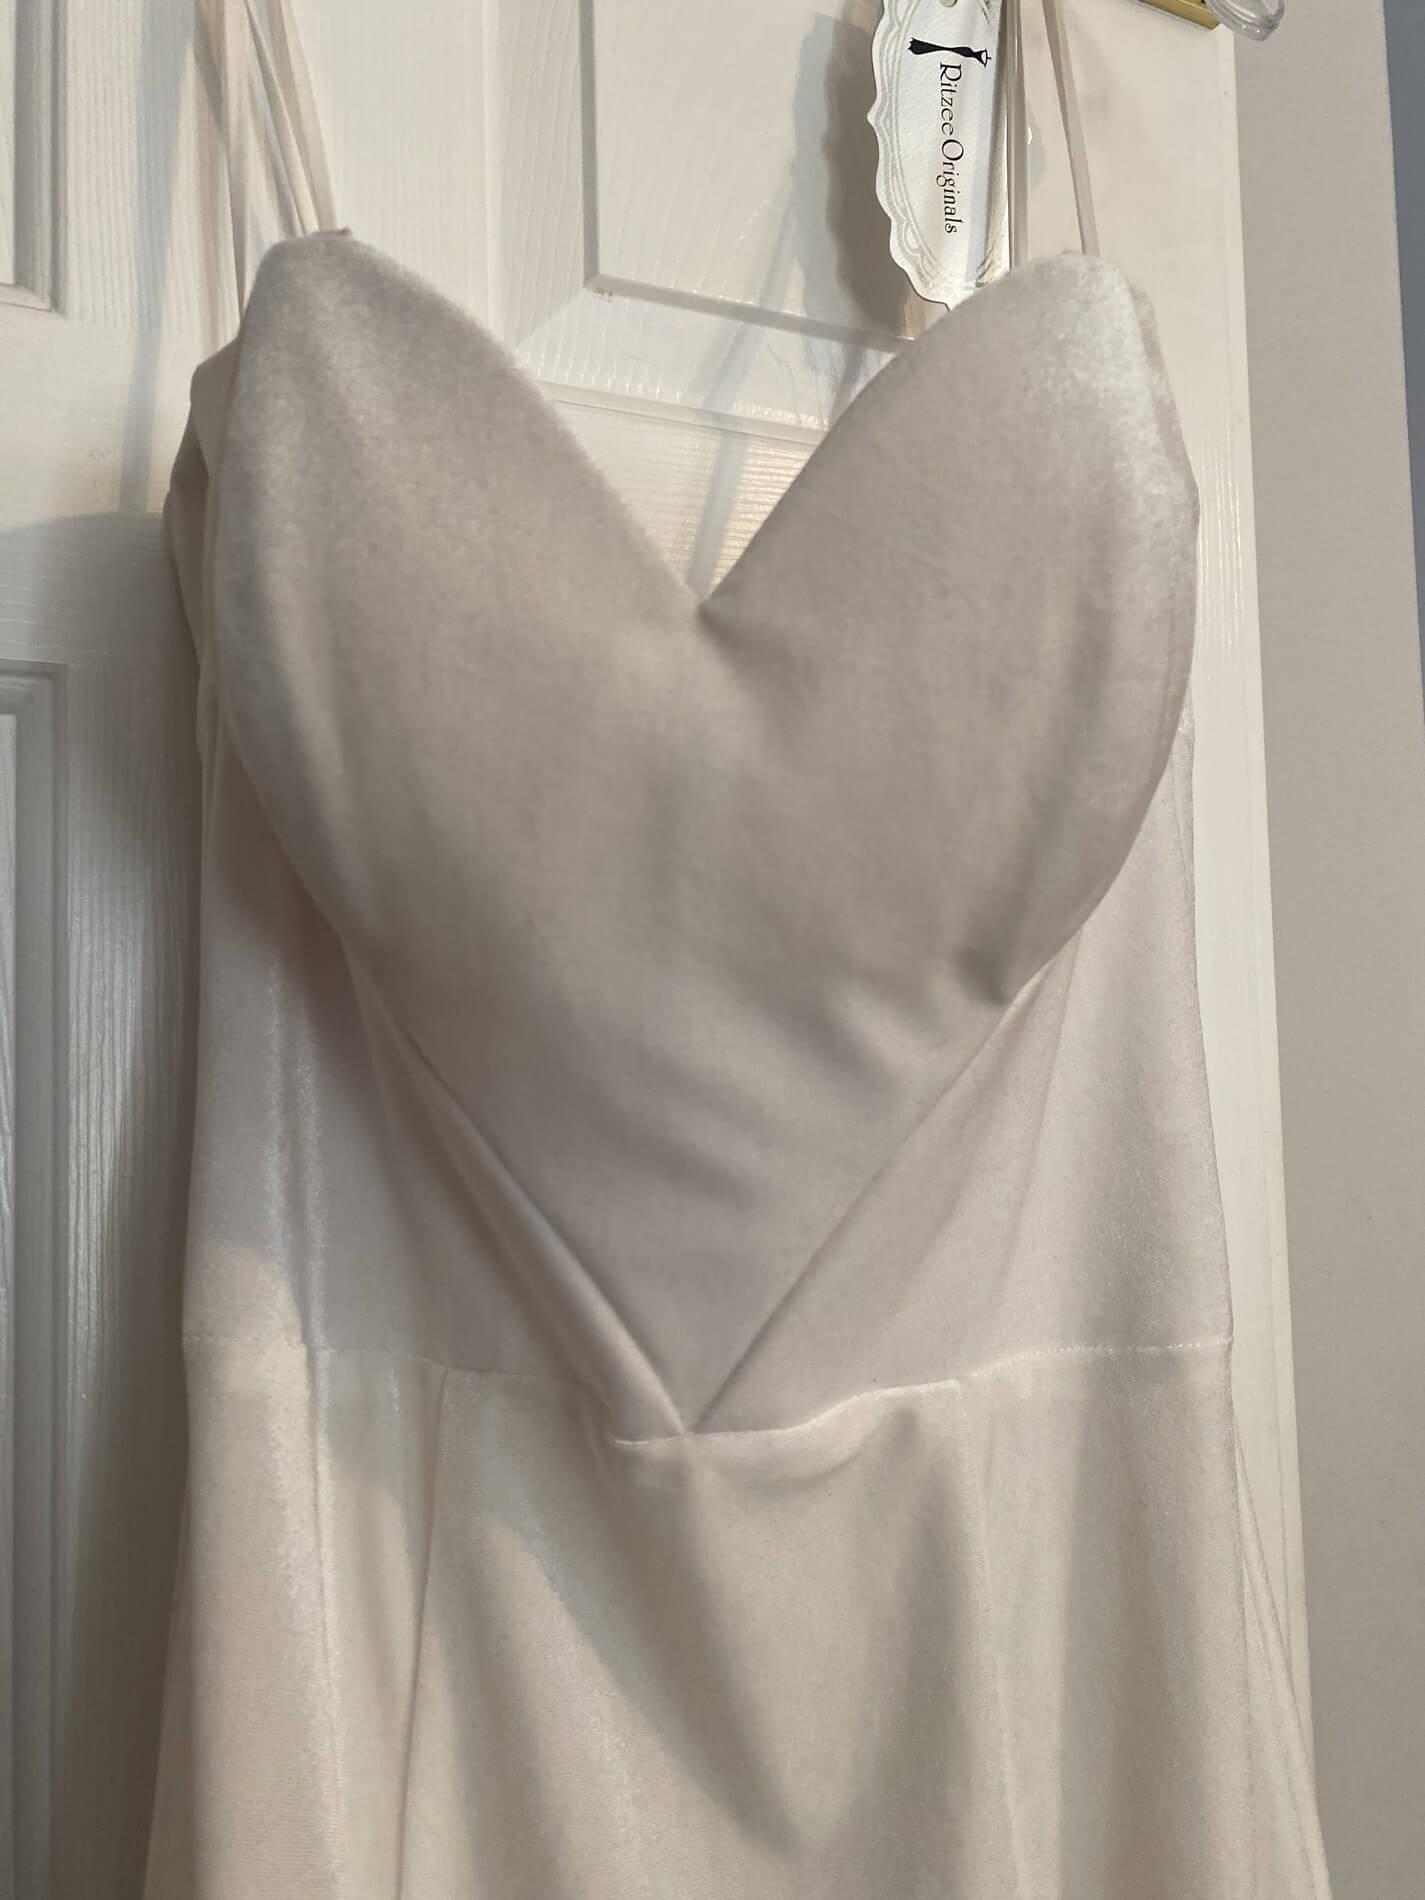 Ritzee Size 2 Wedding White Mermaid Dress on Queenly